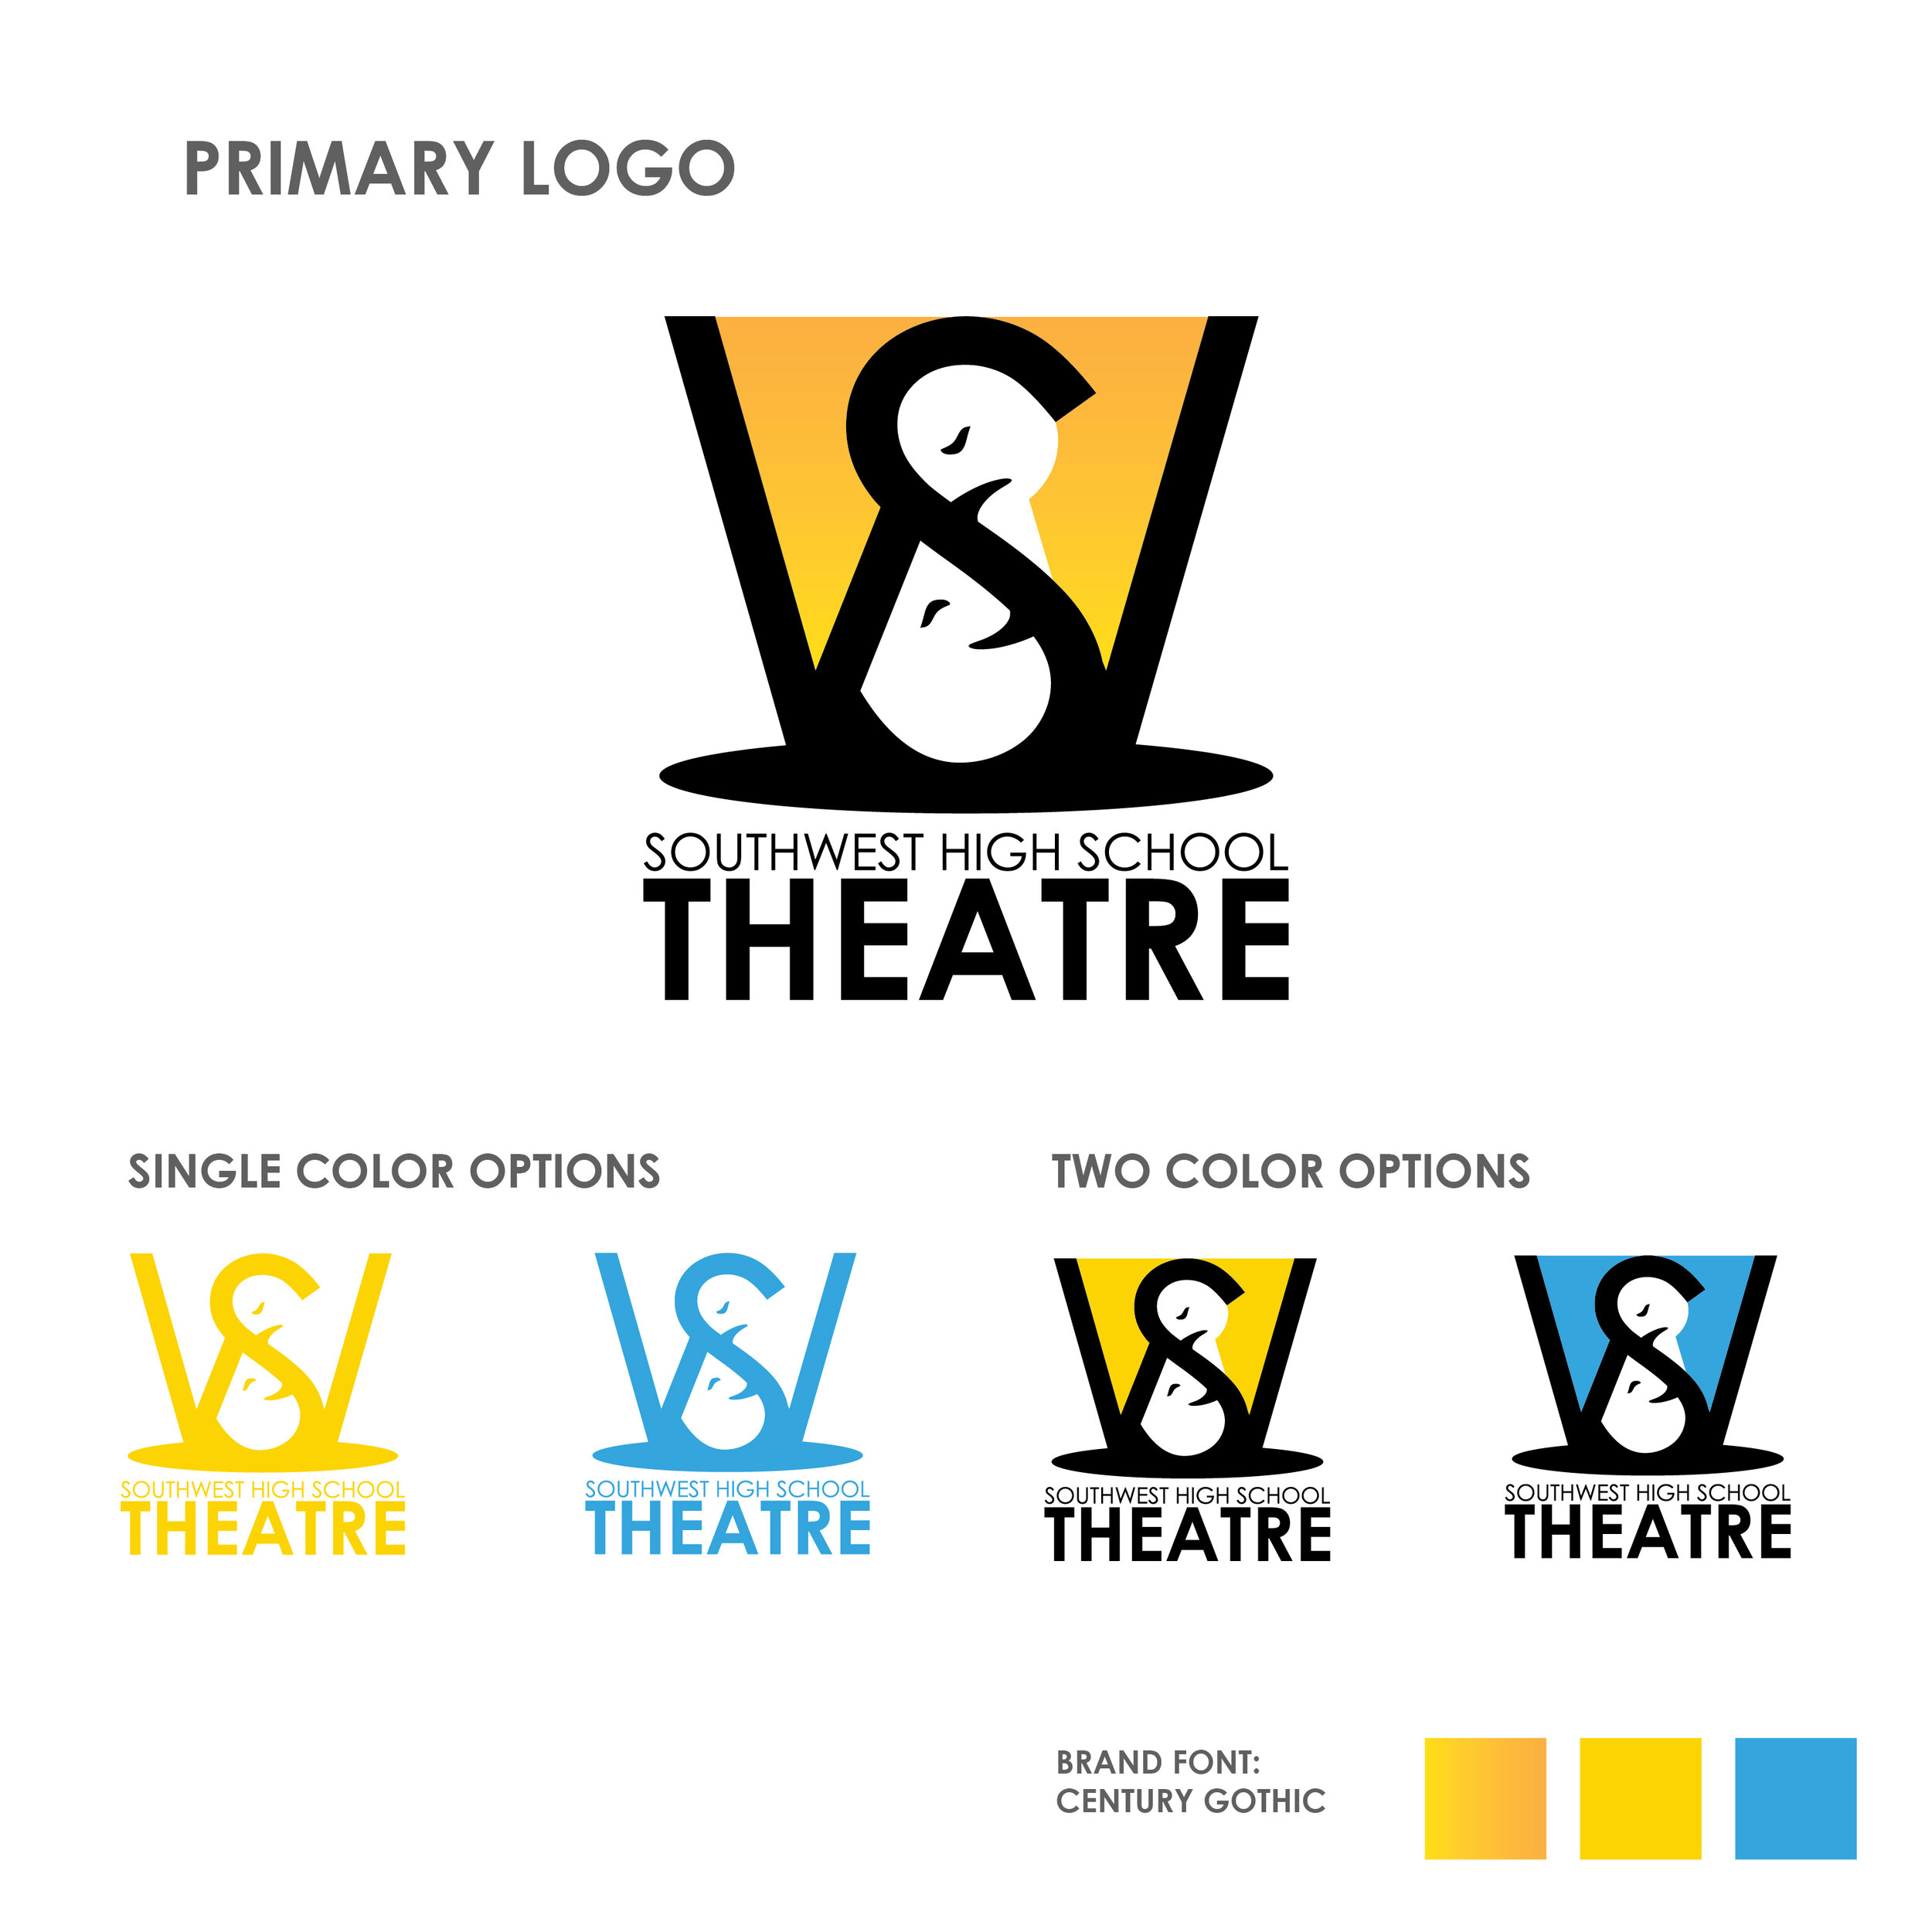 Southwest Theatre - Logo Design and Primary Branding.jpg